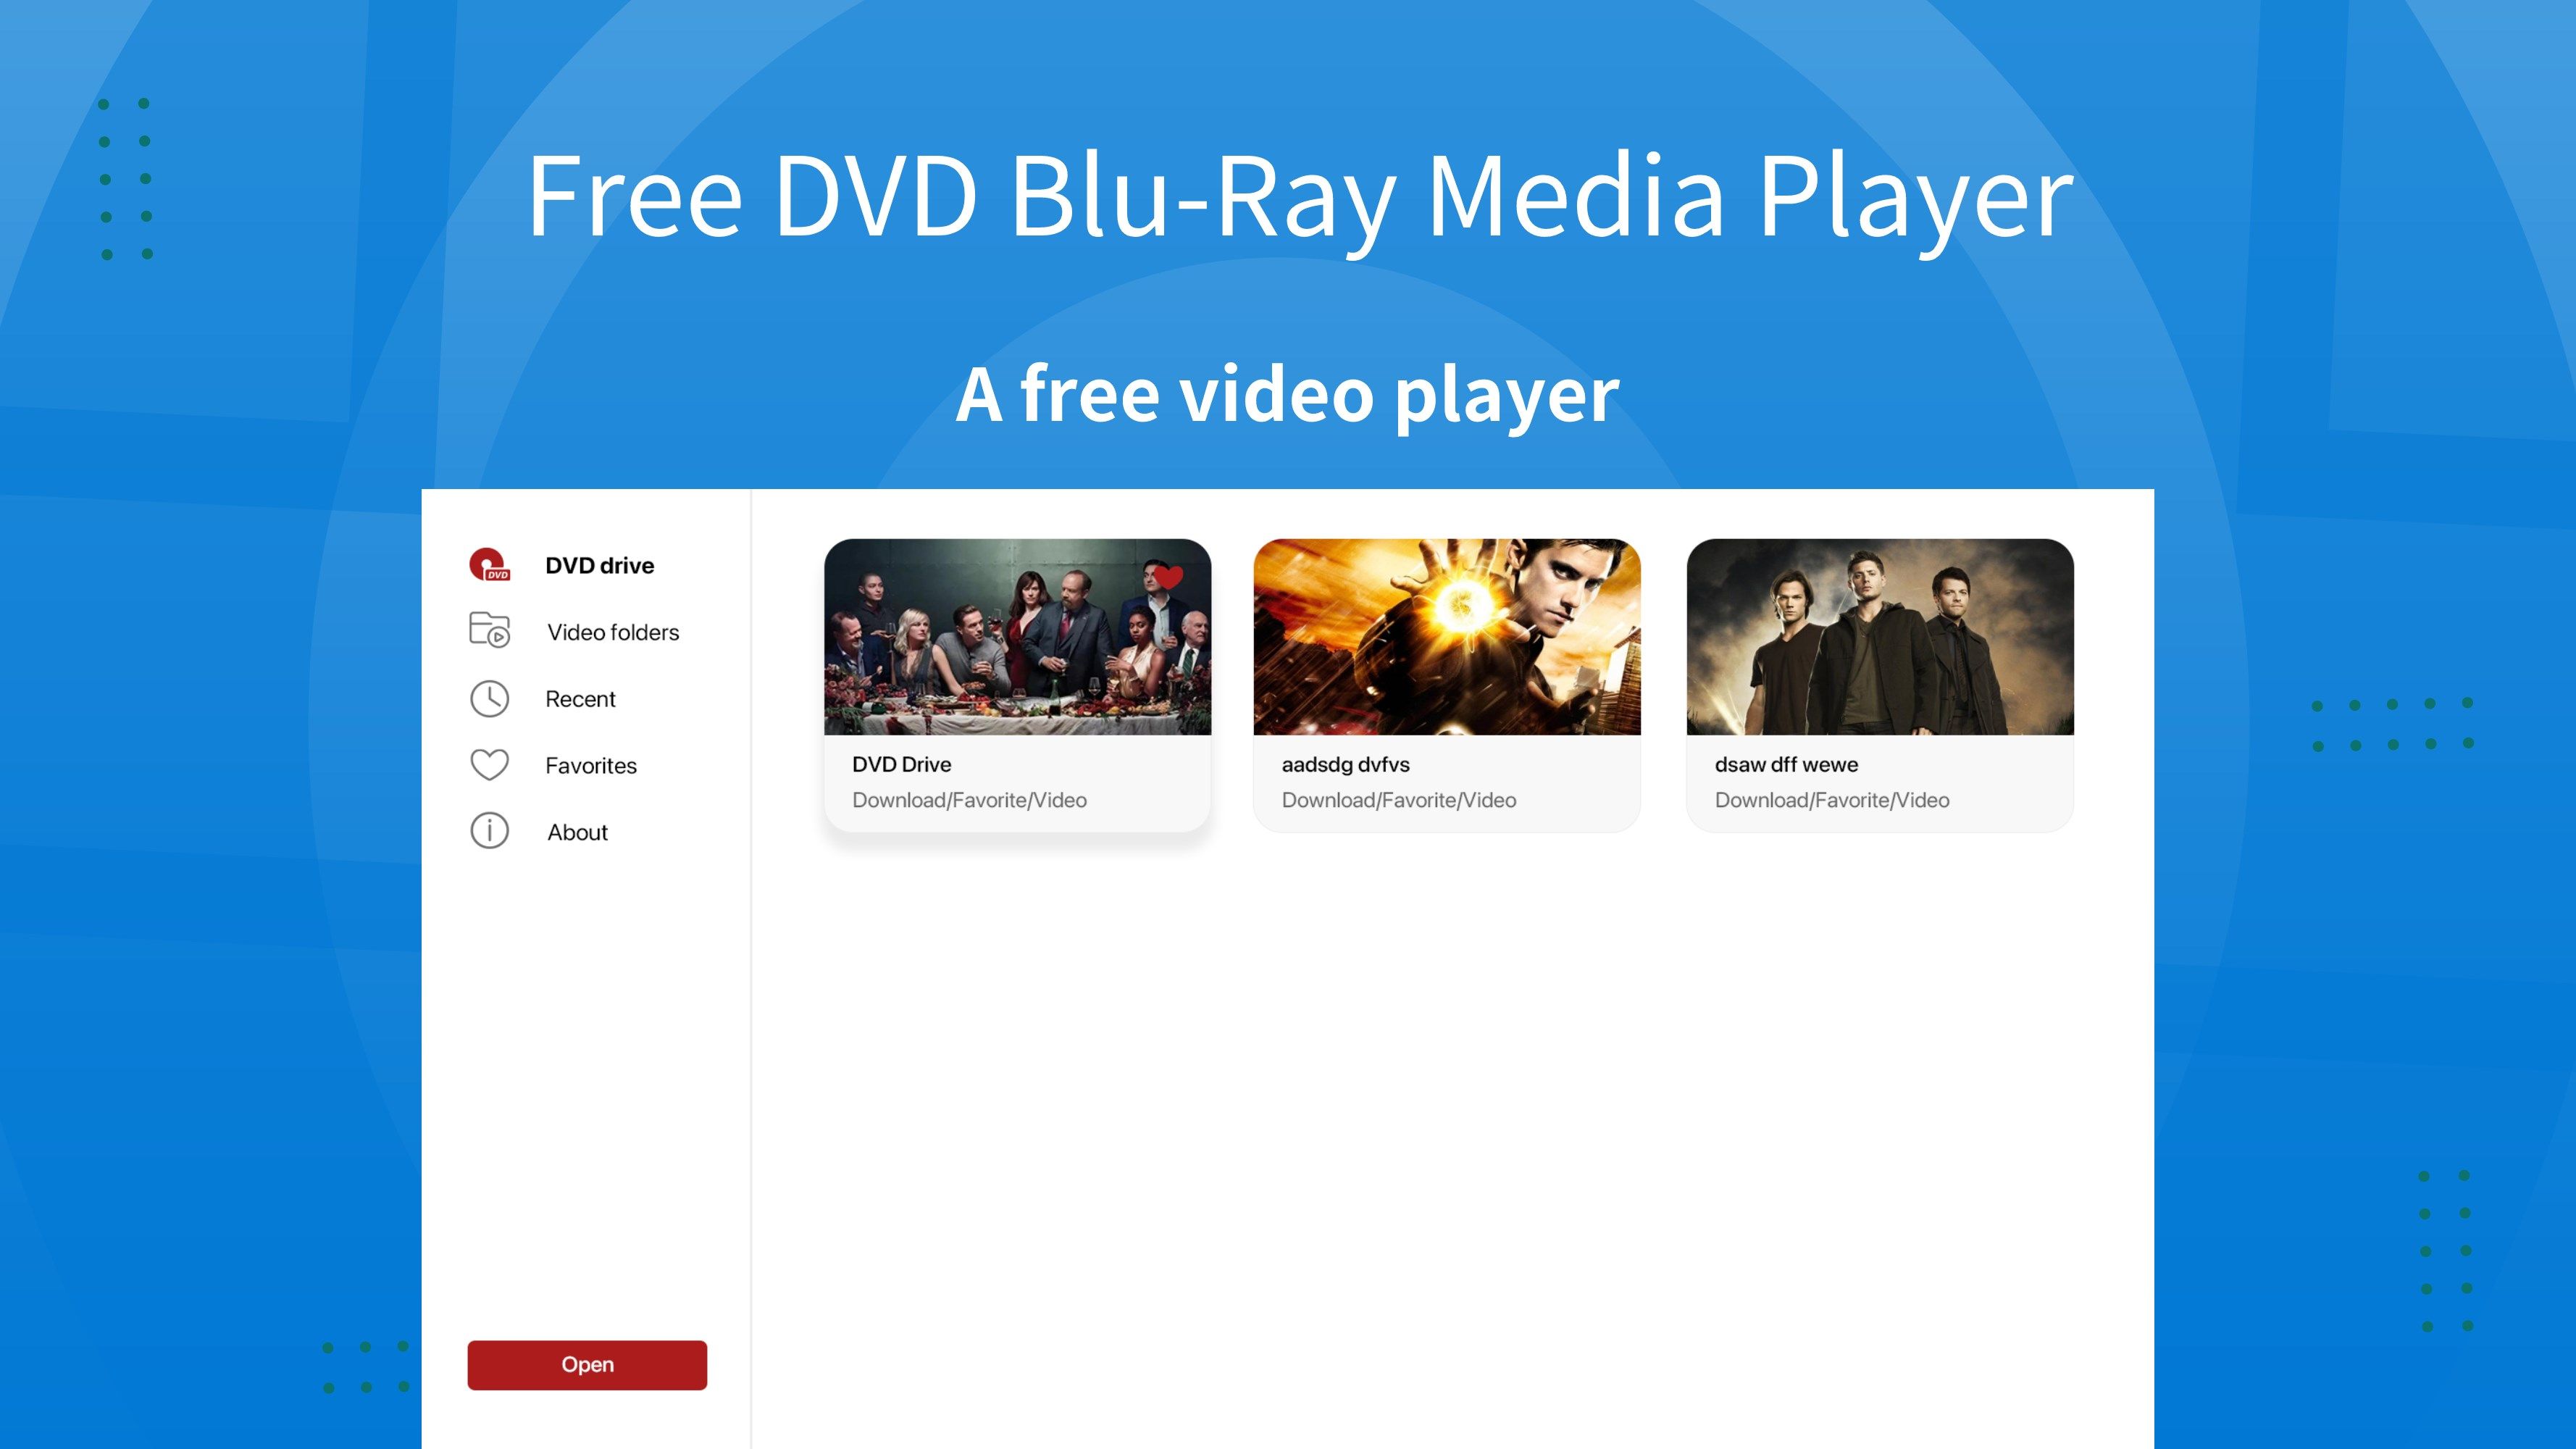 Free DVD Blu-Ray Media Player